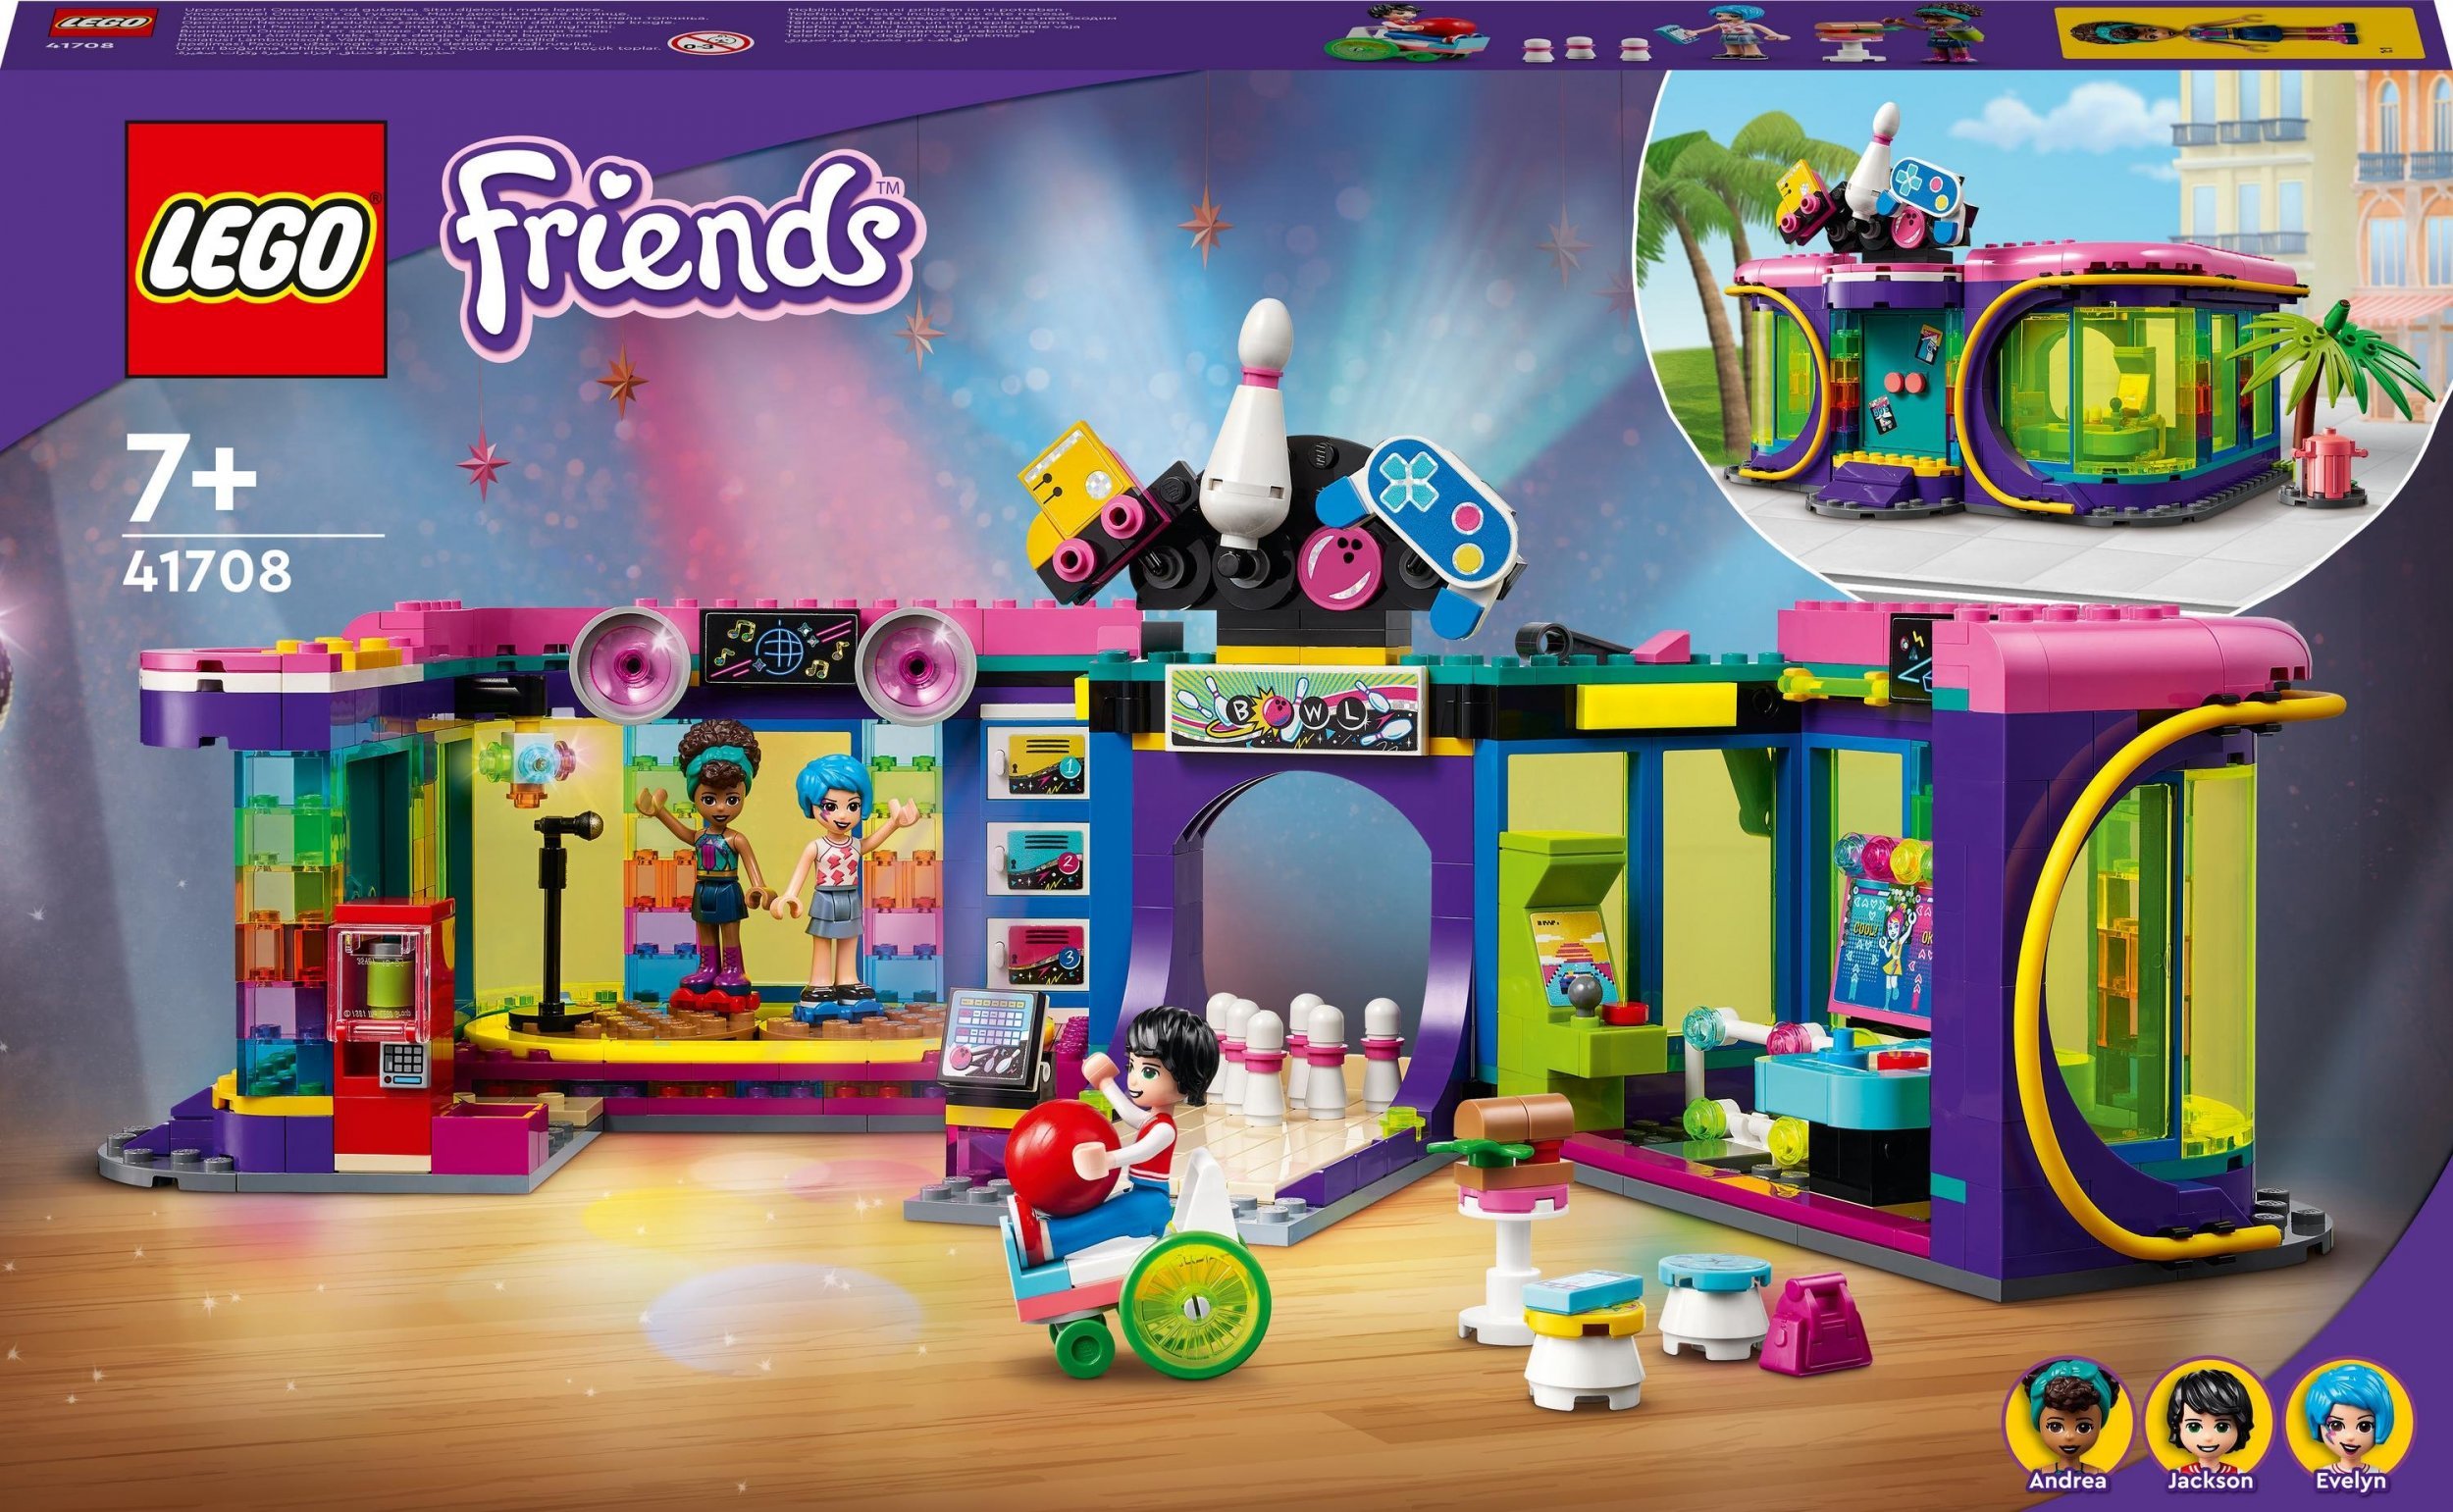 LEGO® Friends - Galeria disco cu jocuri electronice 41708, 642 piese